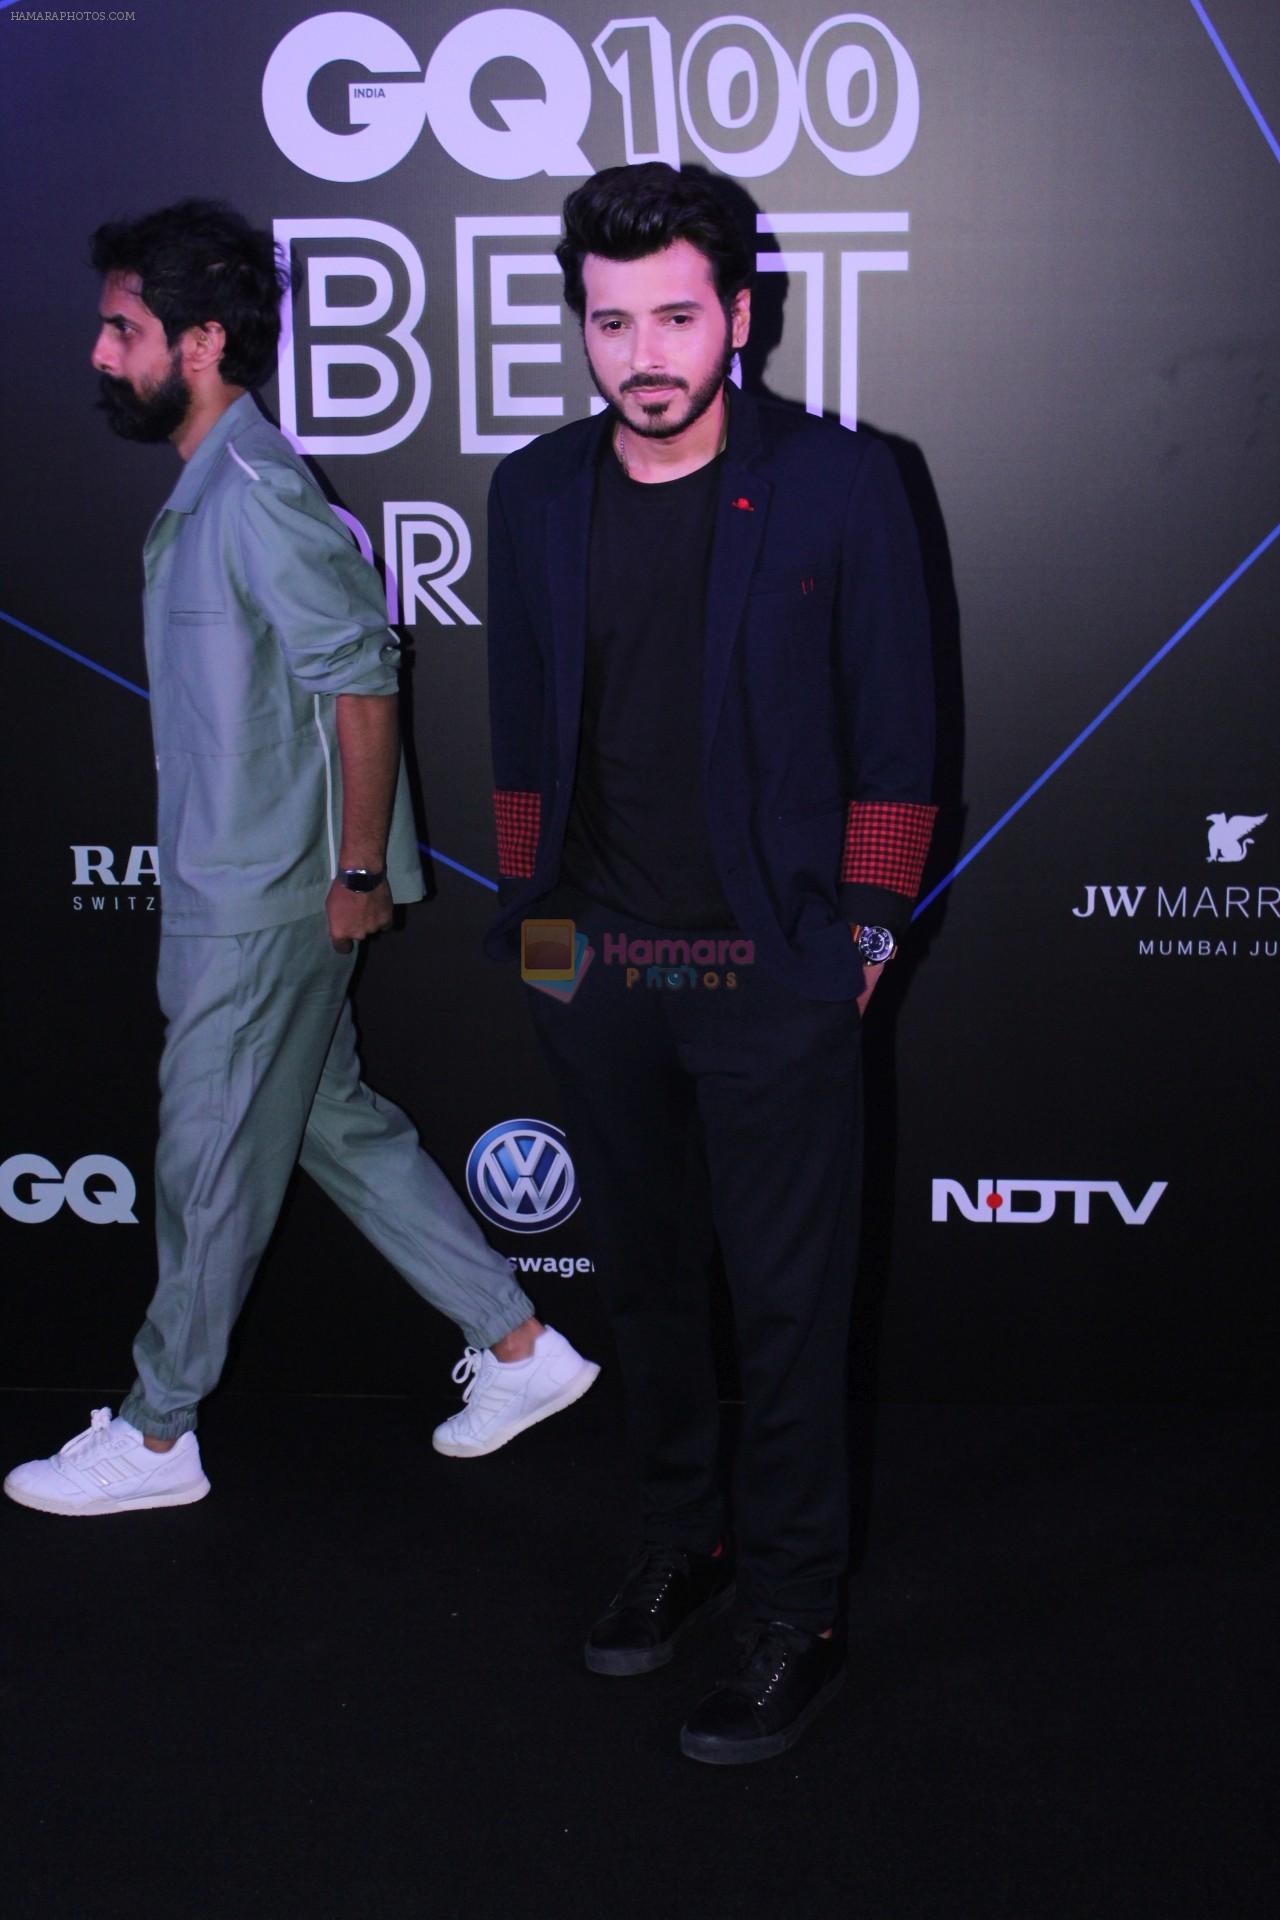 Darshan Kumar at GQ 100 Best Dressed Awards 2019 on 2nd June 2019